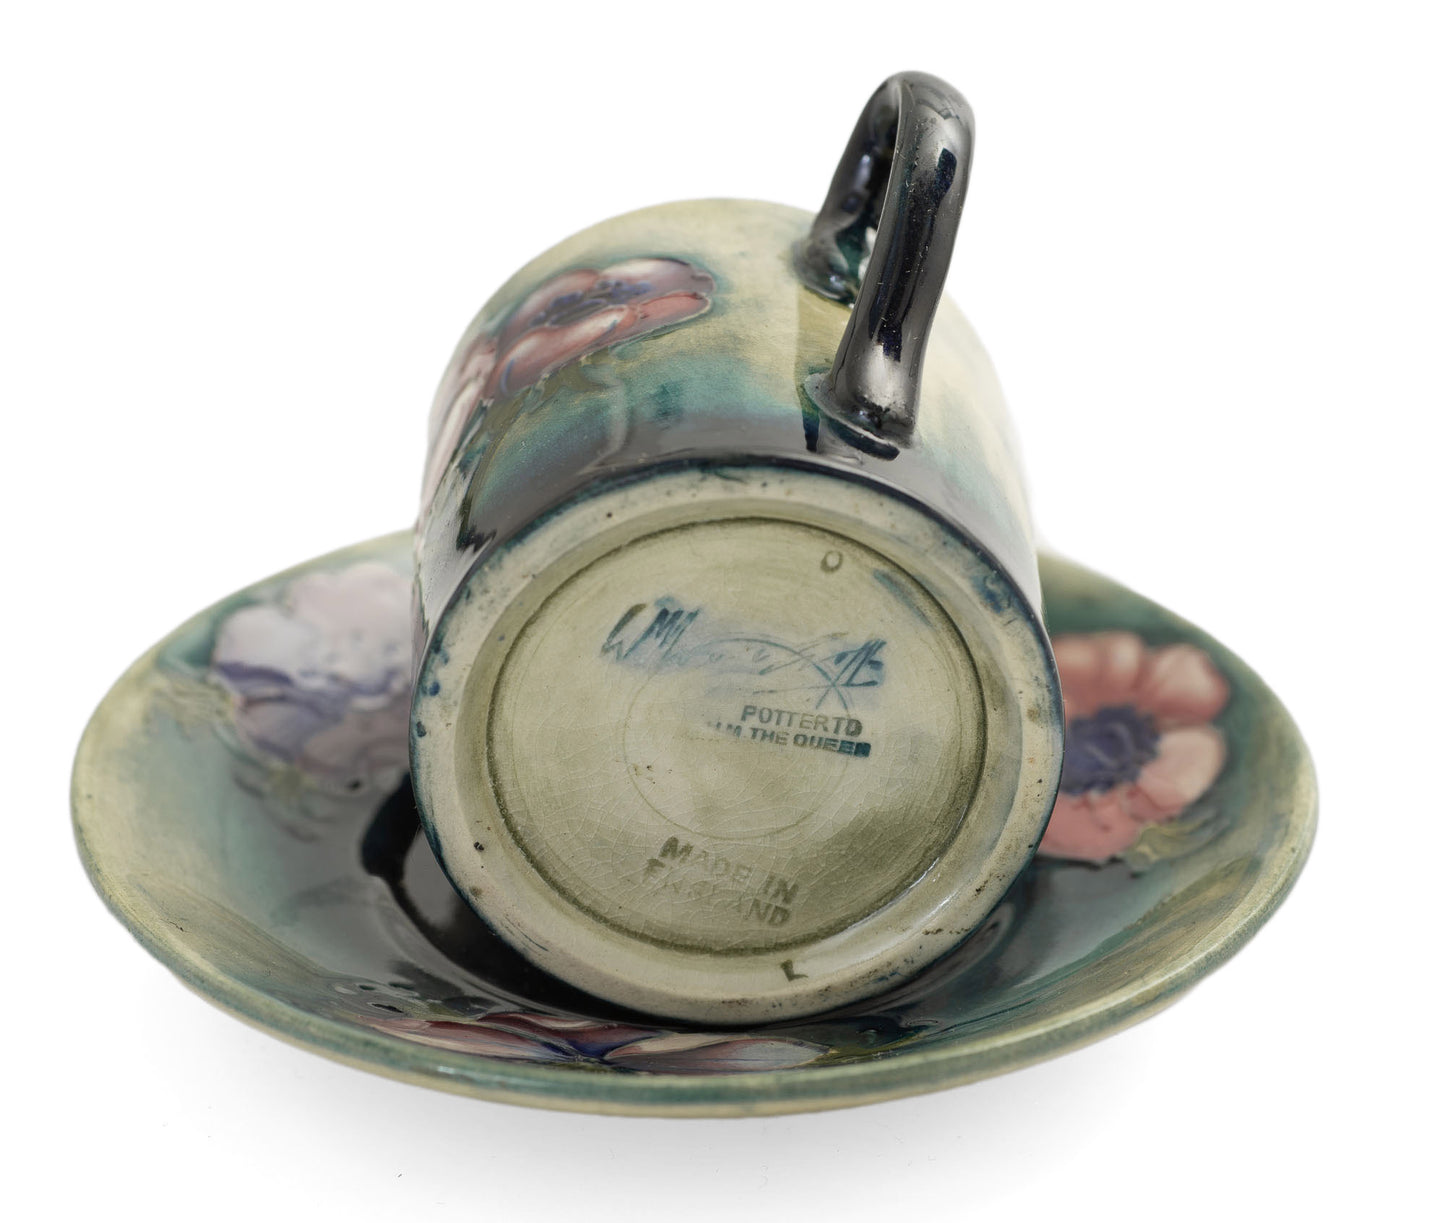 William Moorcroft Art Deco Pottery Anemone Pattern Cup & Saucer - Rare c1930 (2977)